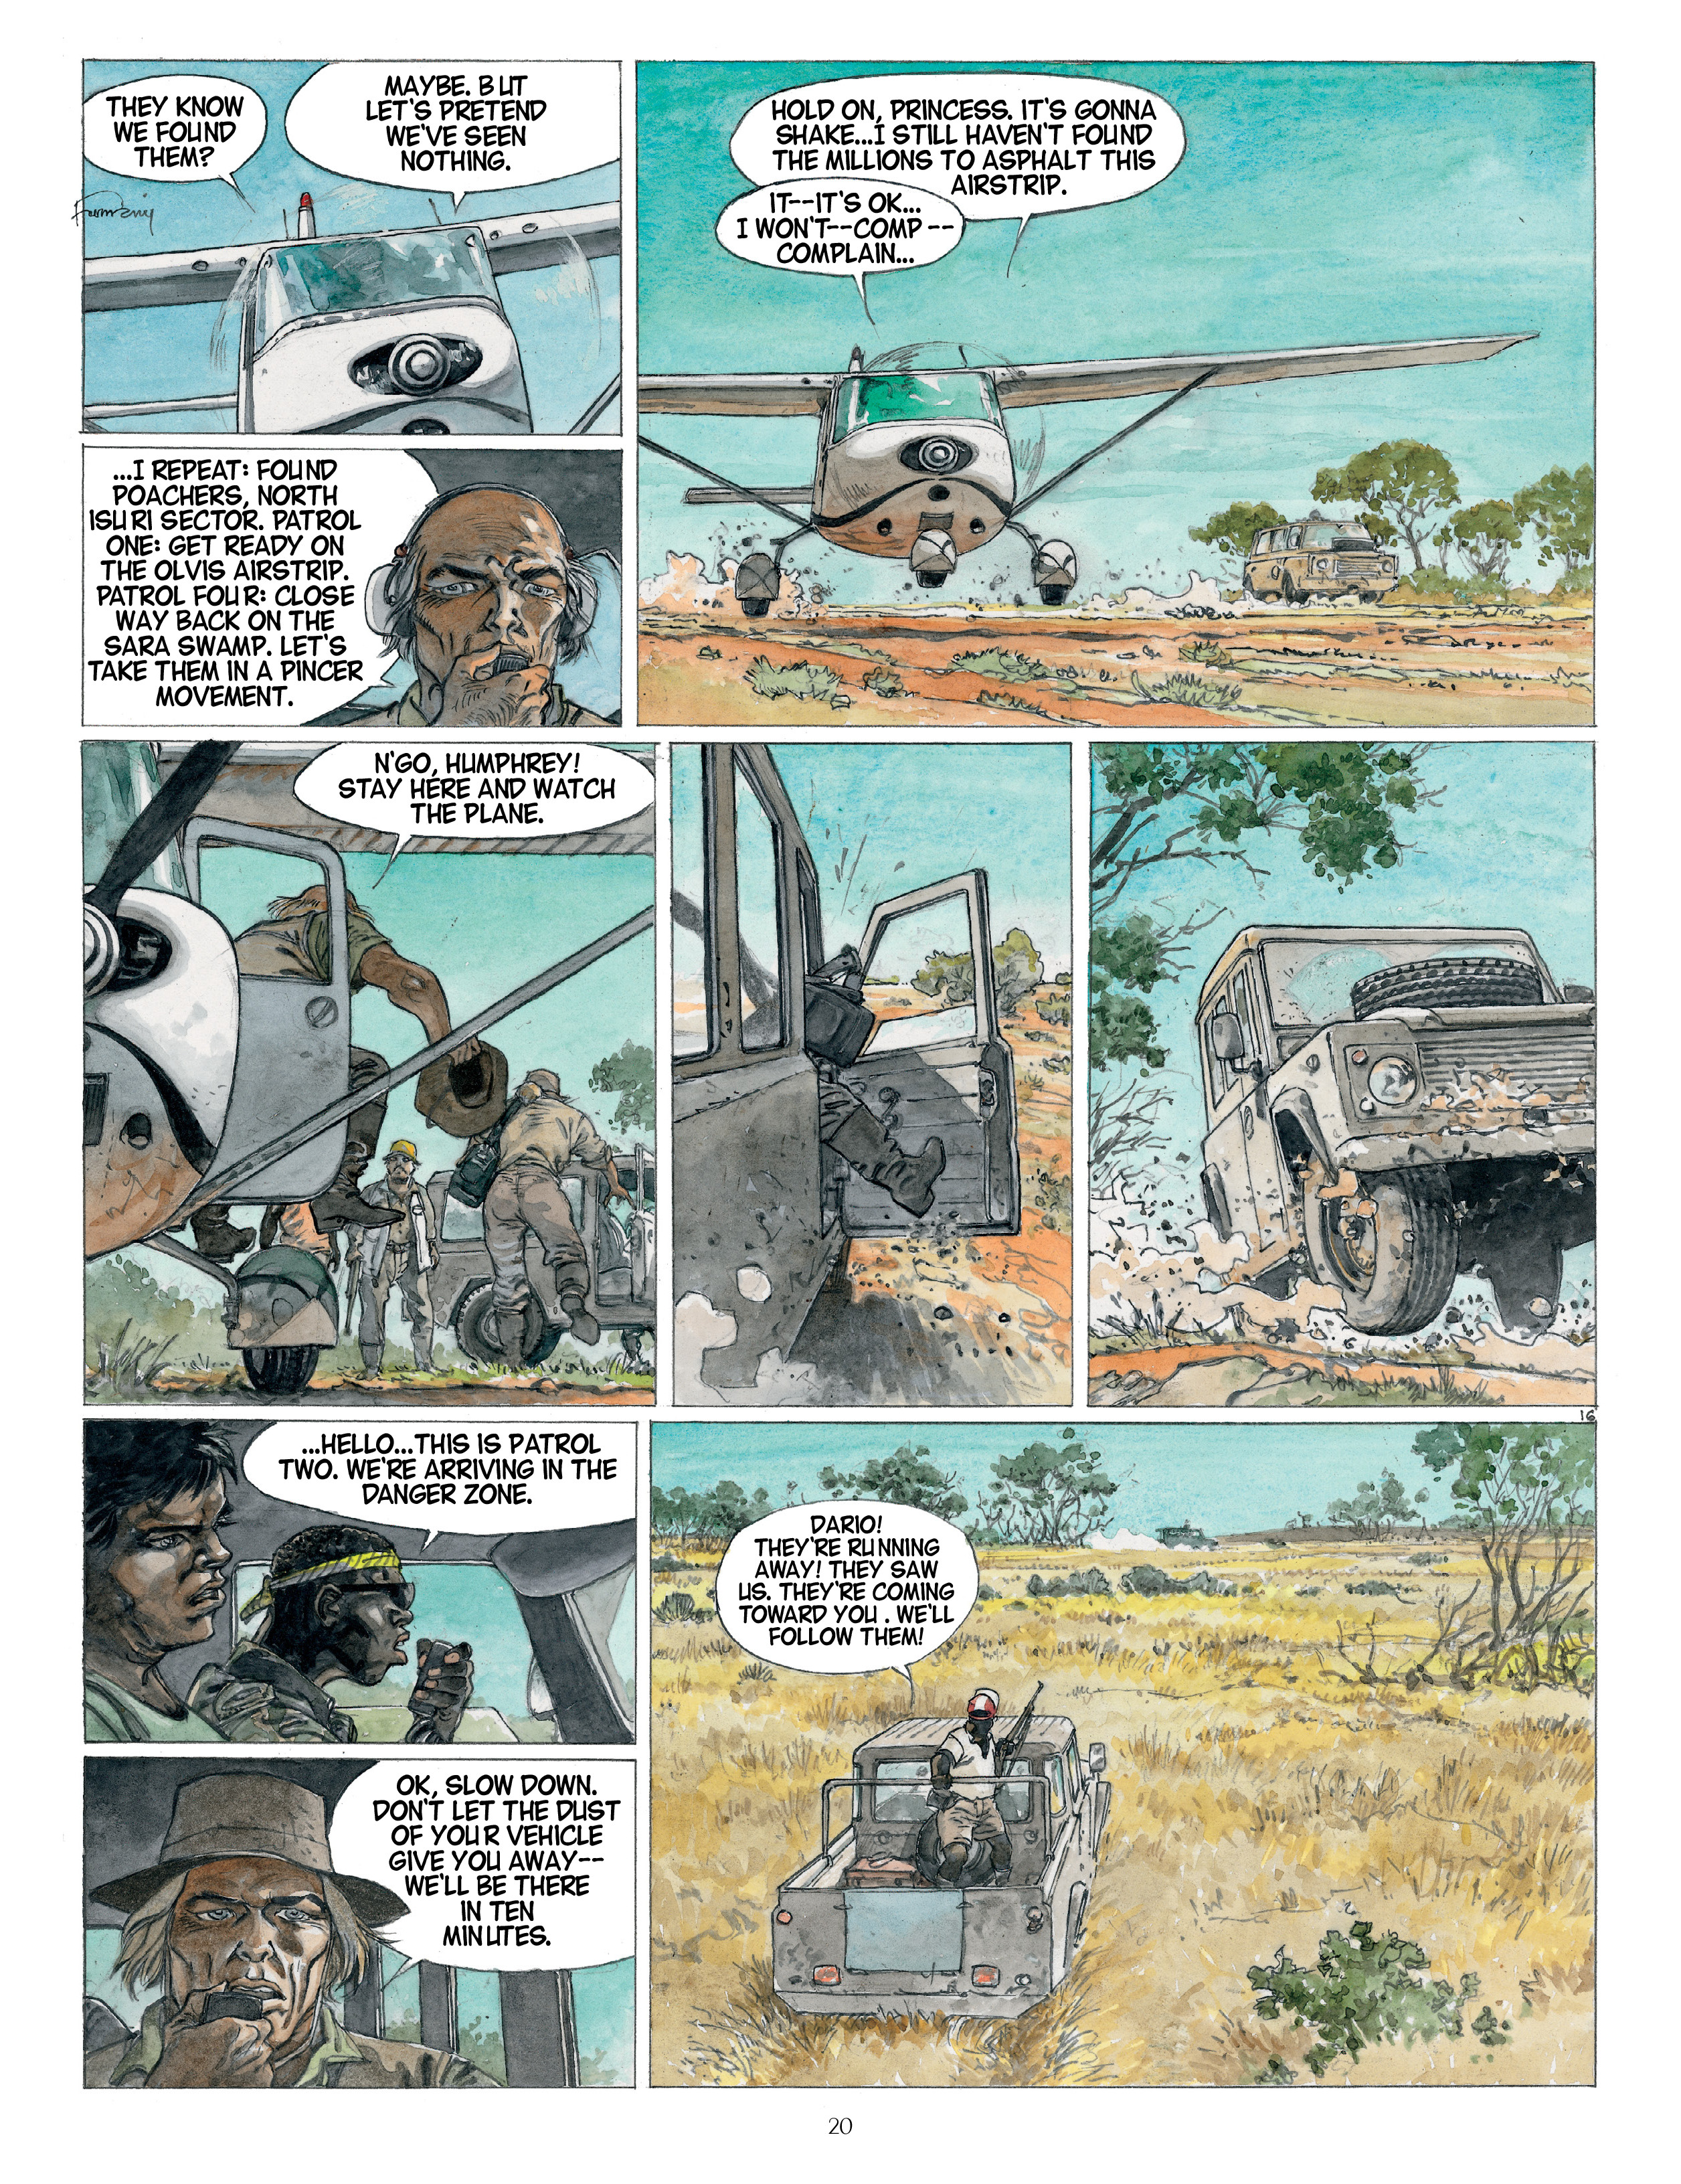 Afrika Tpb | Read Afrika Tpb comic online in high quality. Read 